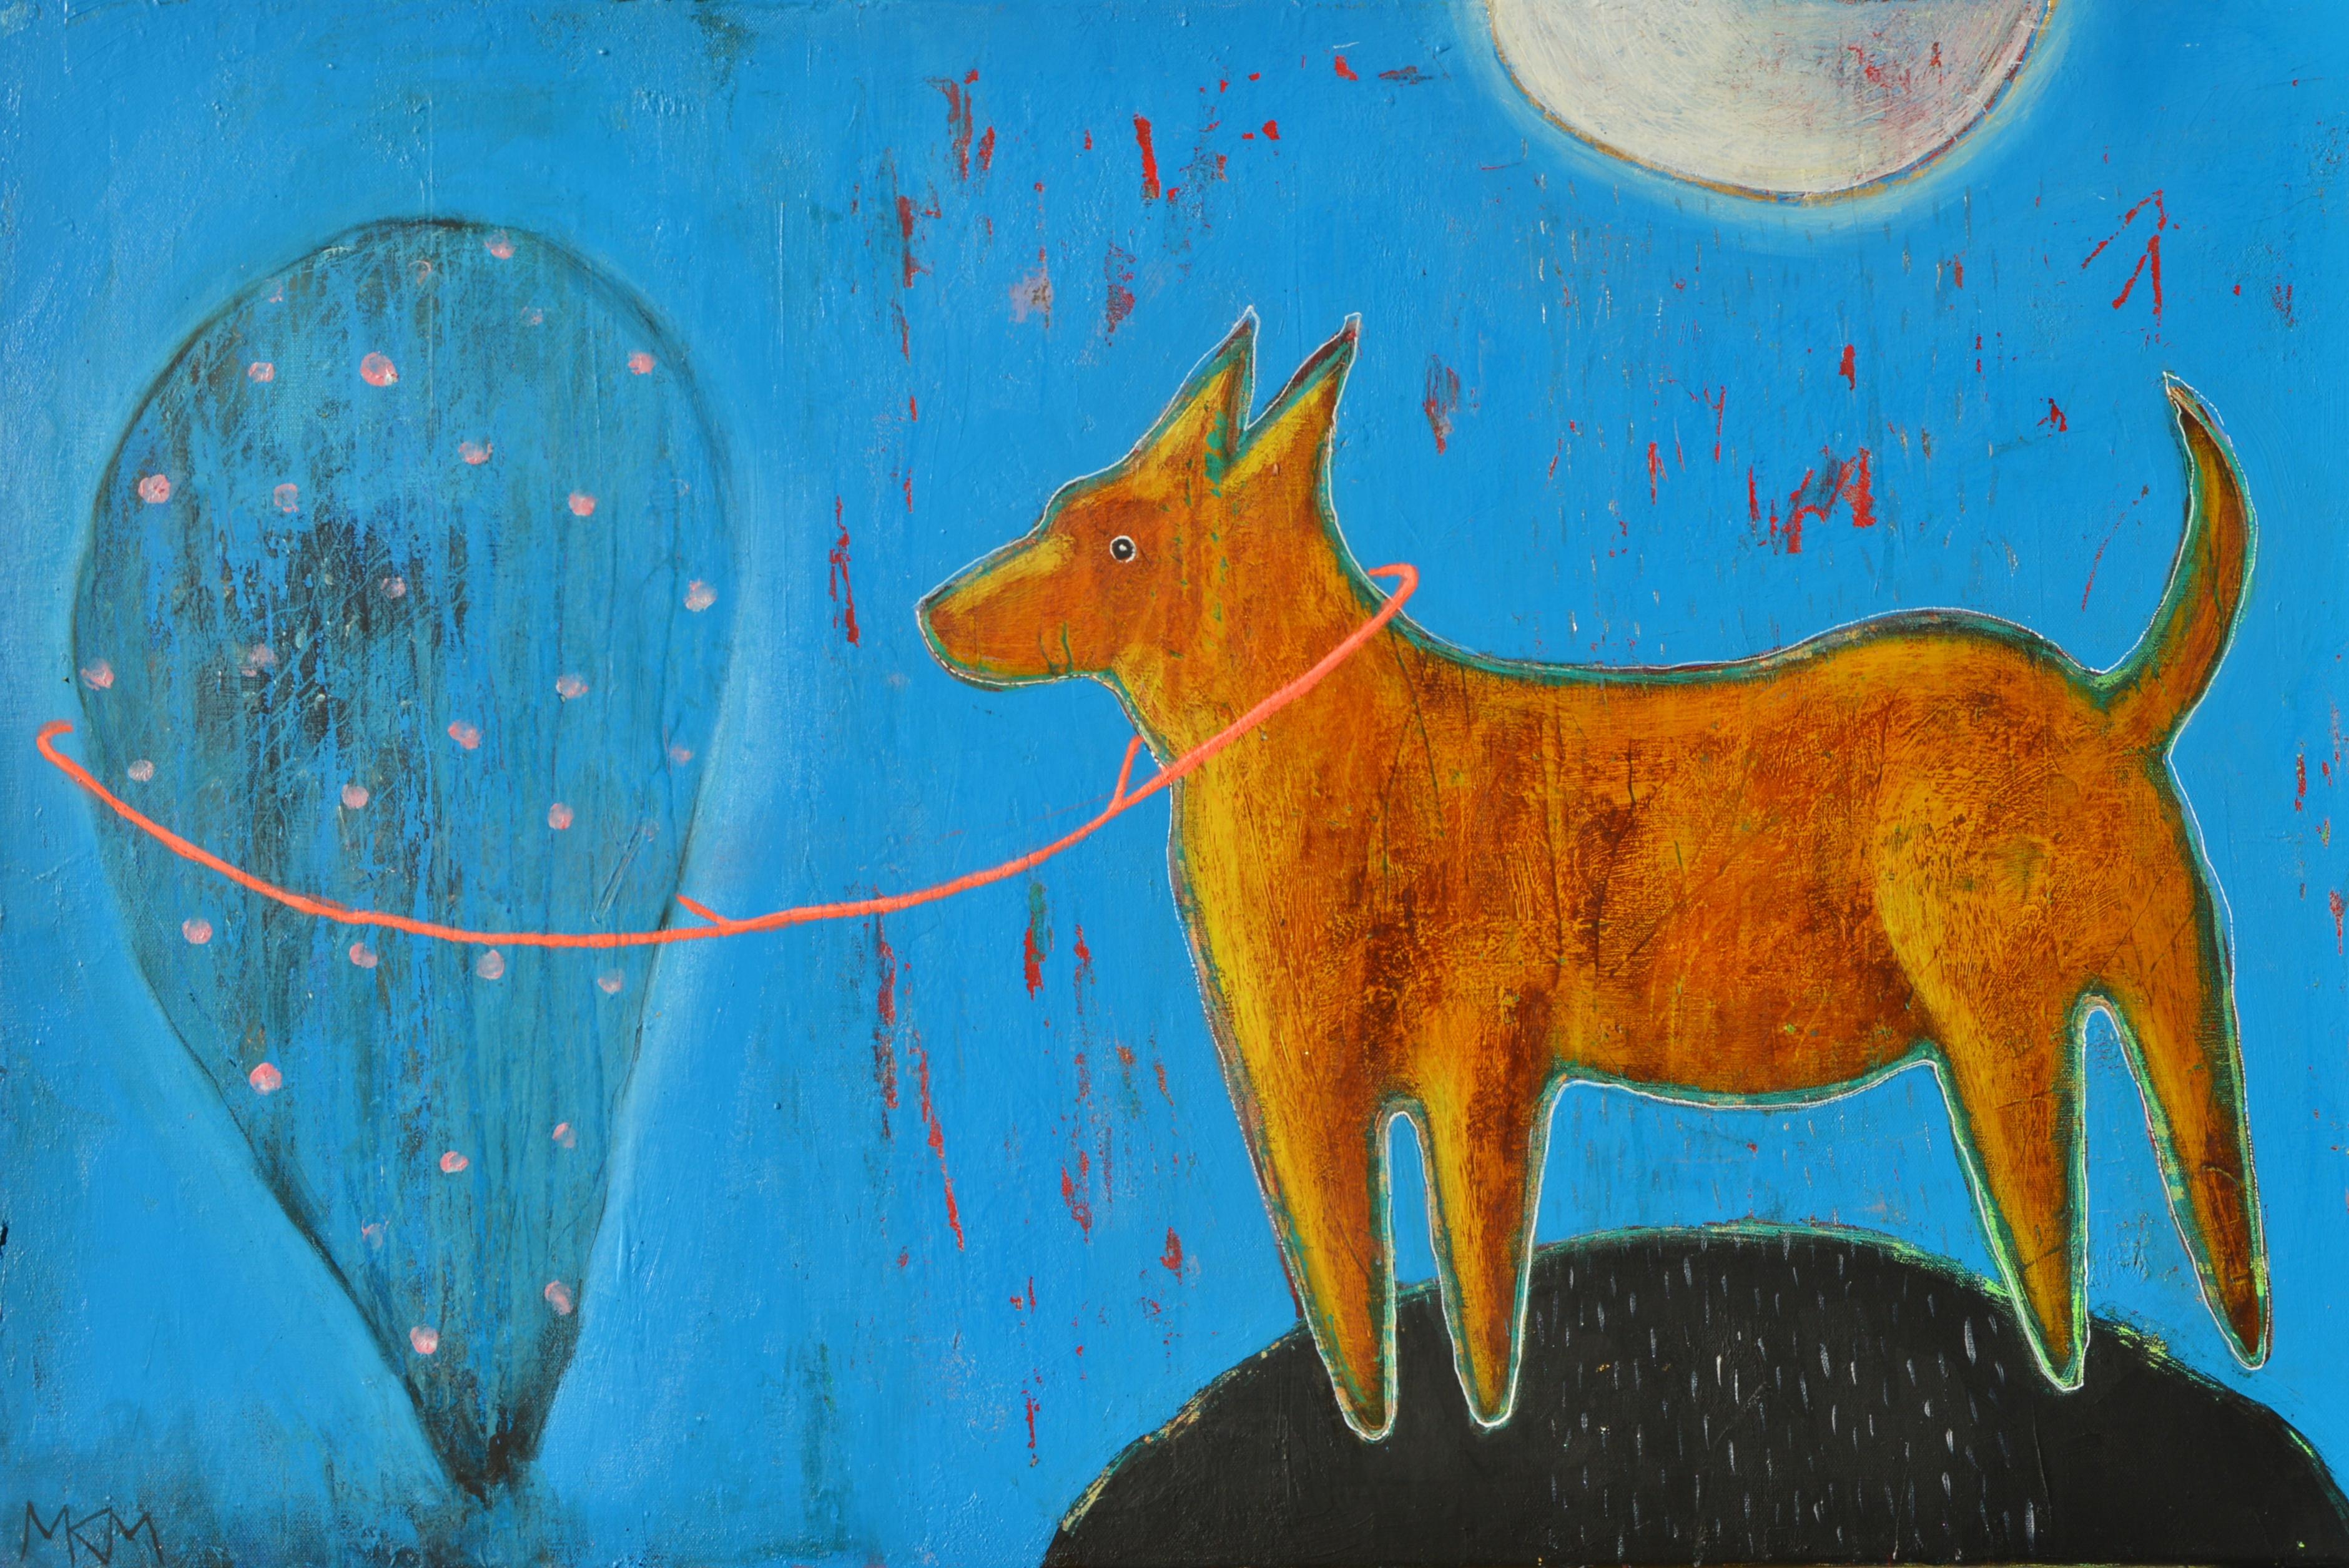 Milena Kirilova Mladenova Figurative Painting - The Yellow Dog and The Balloon - Painting Colors Blue Brown Yellow White Black